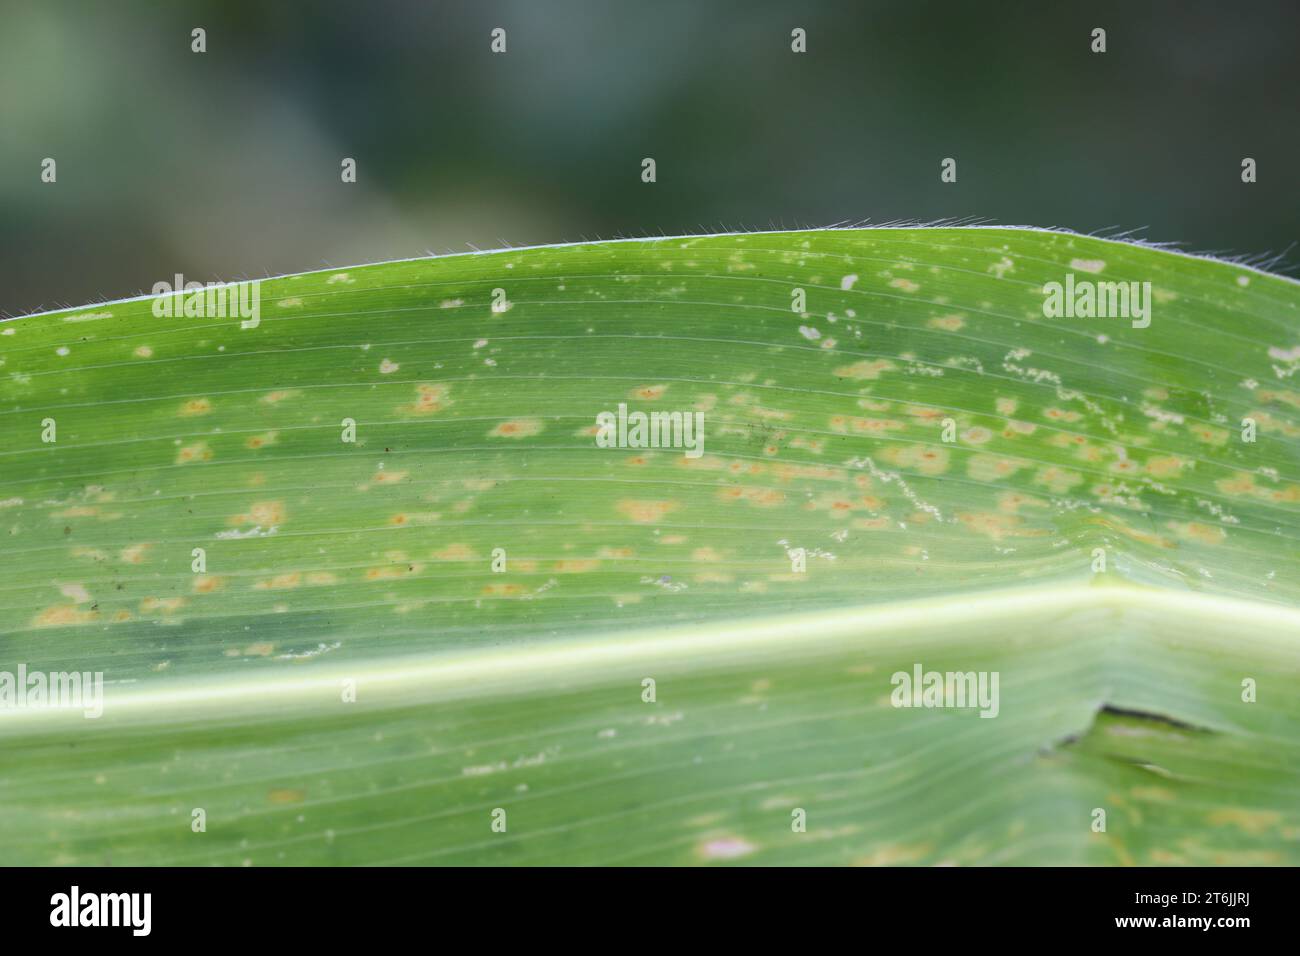 Orange corn rust fungus, Puccinia sorghi, on leaf of cornstalk. Fungus control, plant disease and yield loss maize. Stock Photo